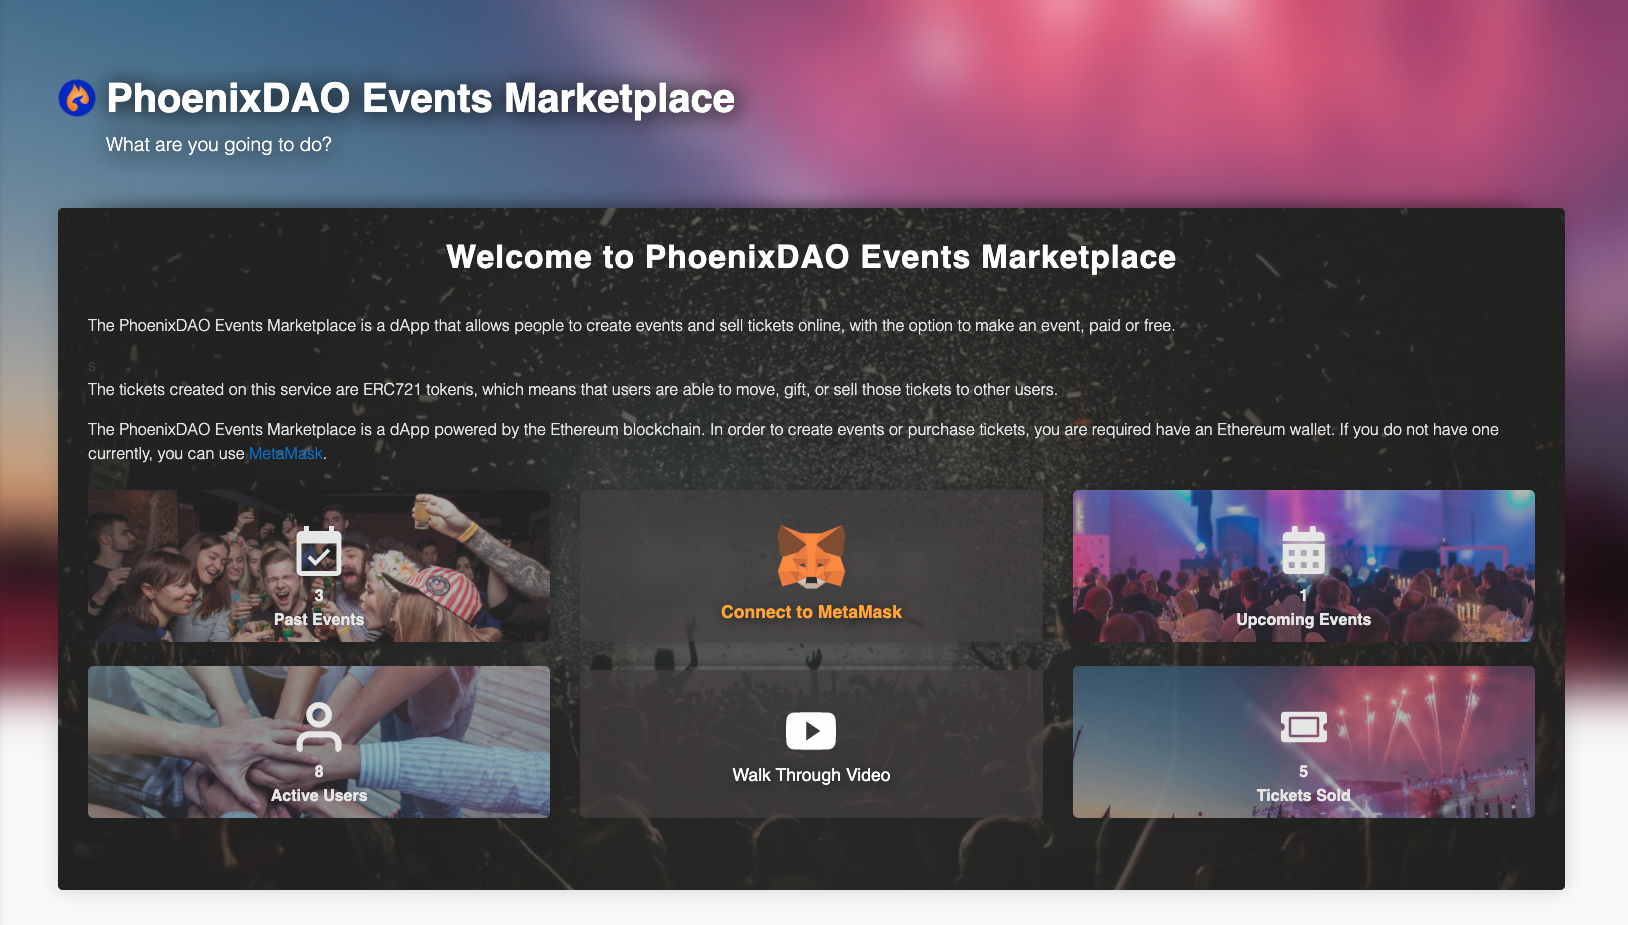 The PhoenixDAO Events Marketplace